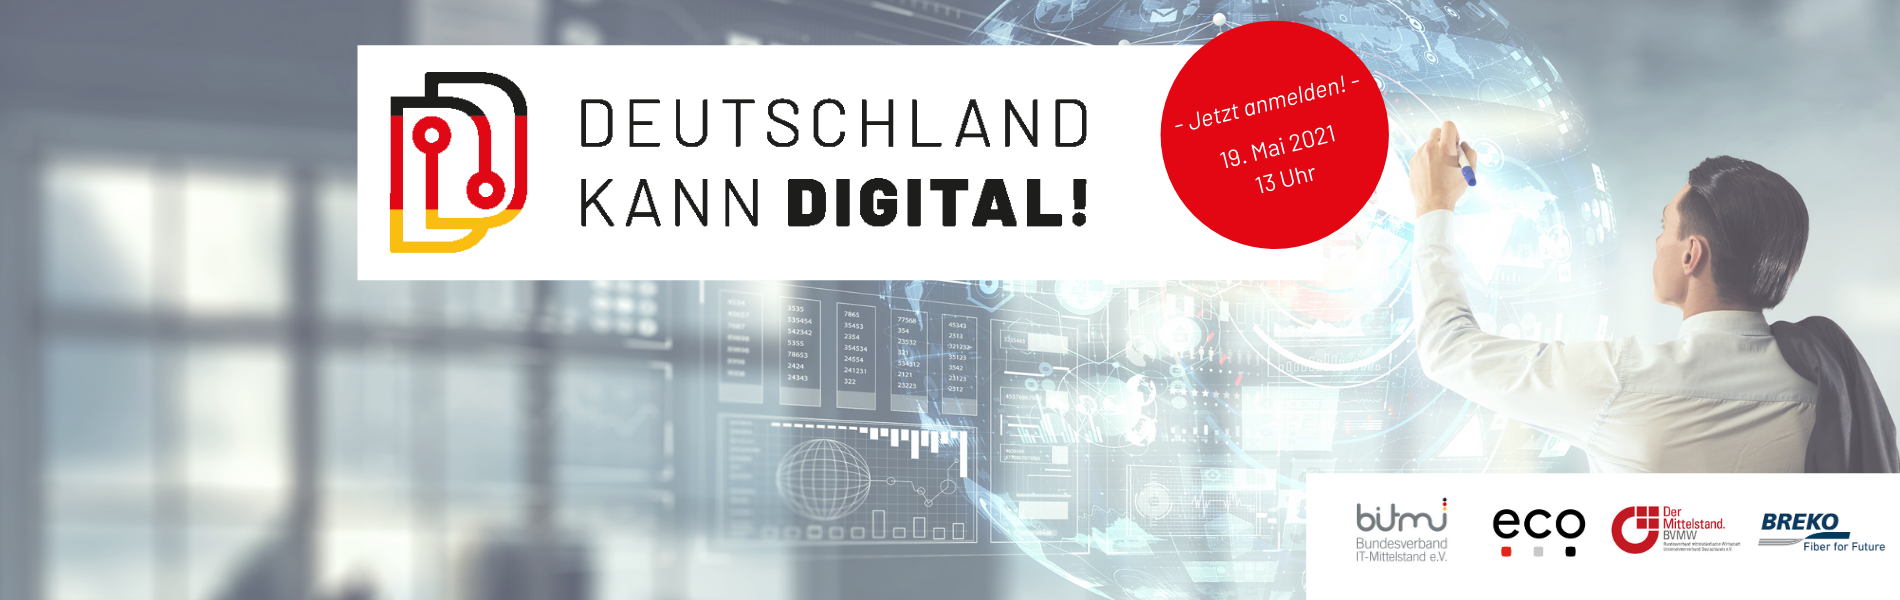 Deutschland kann digital! live Folge zwei: Digitale Bildung